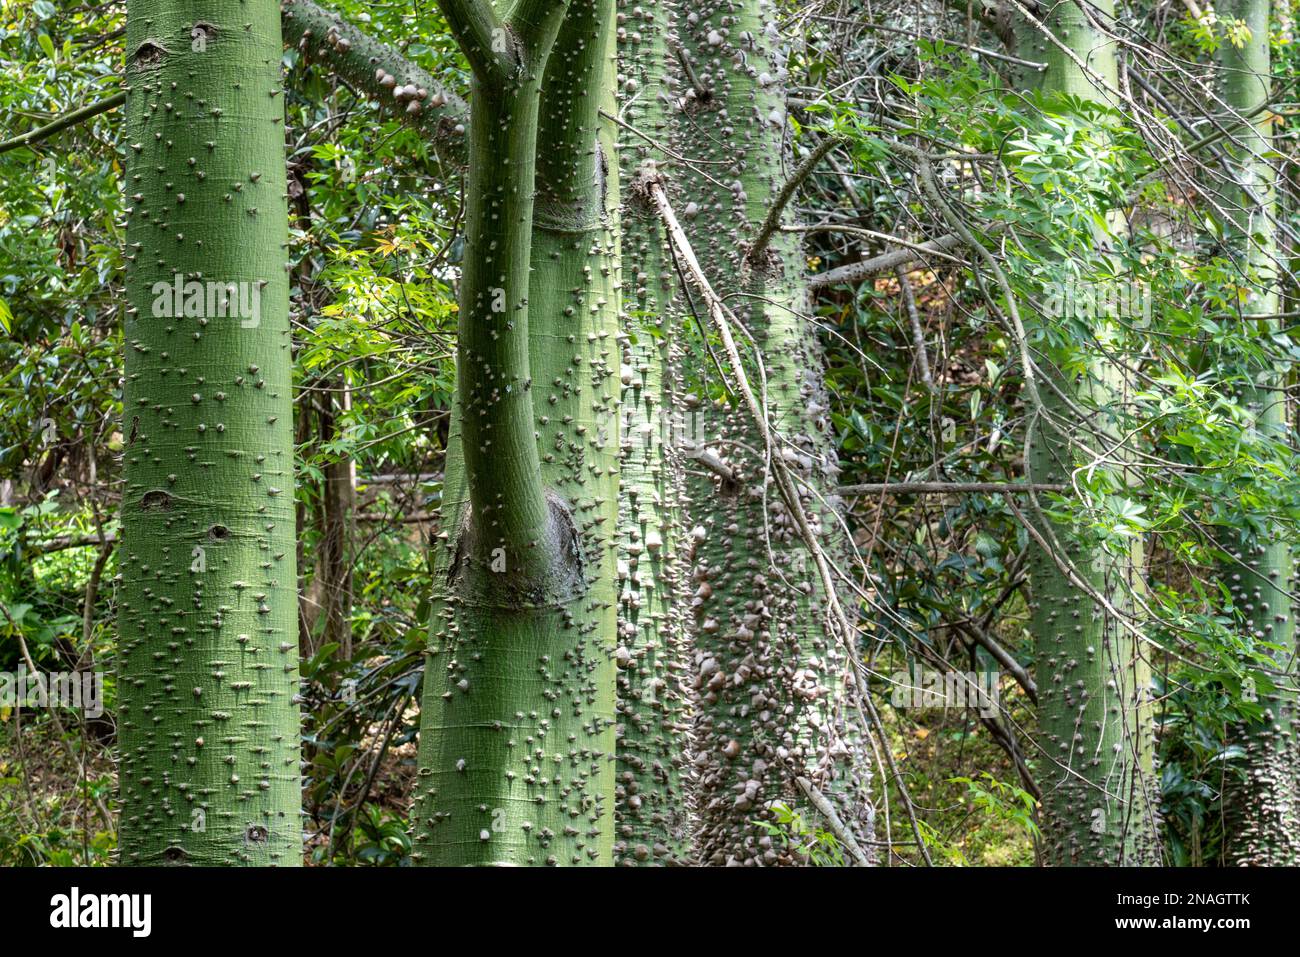 Thorny trunks of Ceiba trees, Ceiba pentandra, protect them from strangler fig plants. San Agustin Etla, Oaxaca, Mexico. Stock Photo